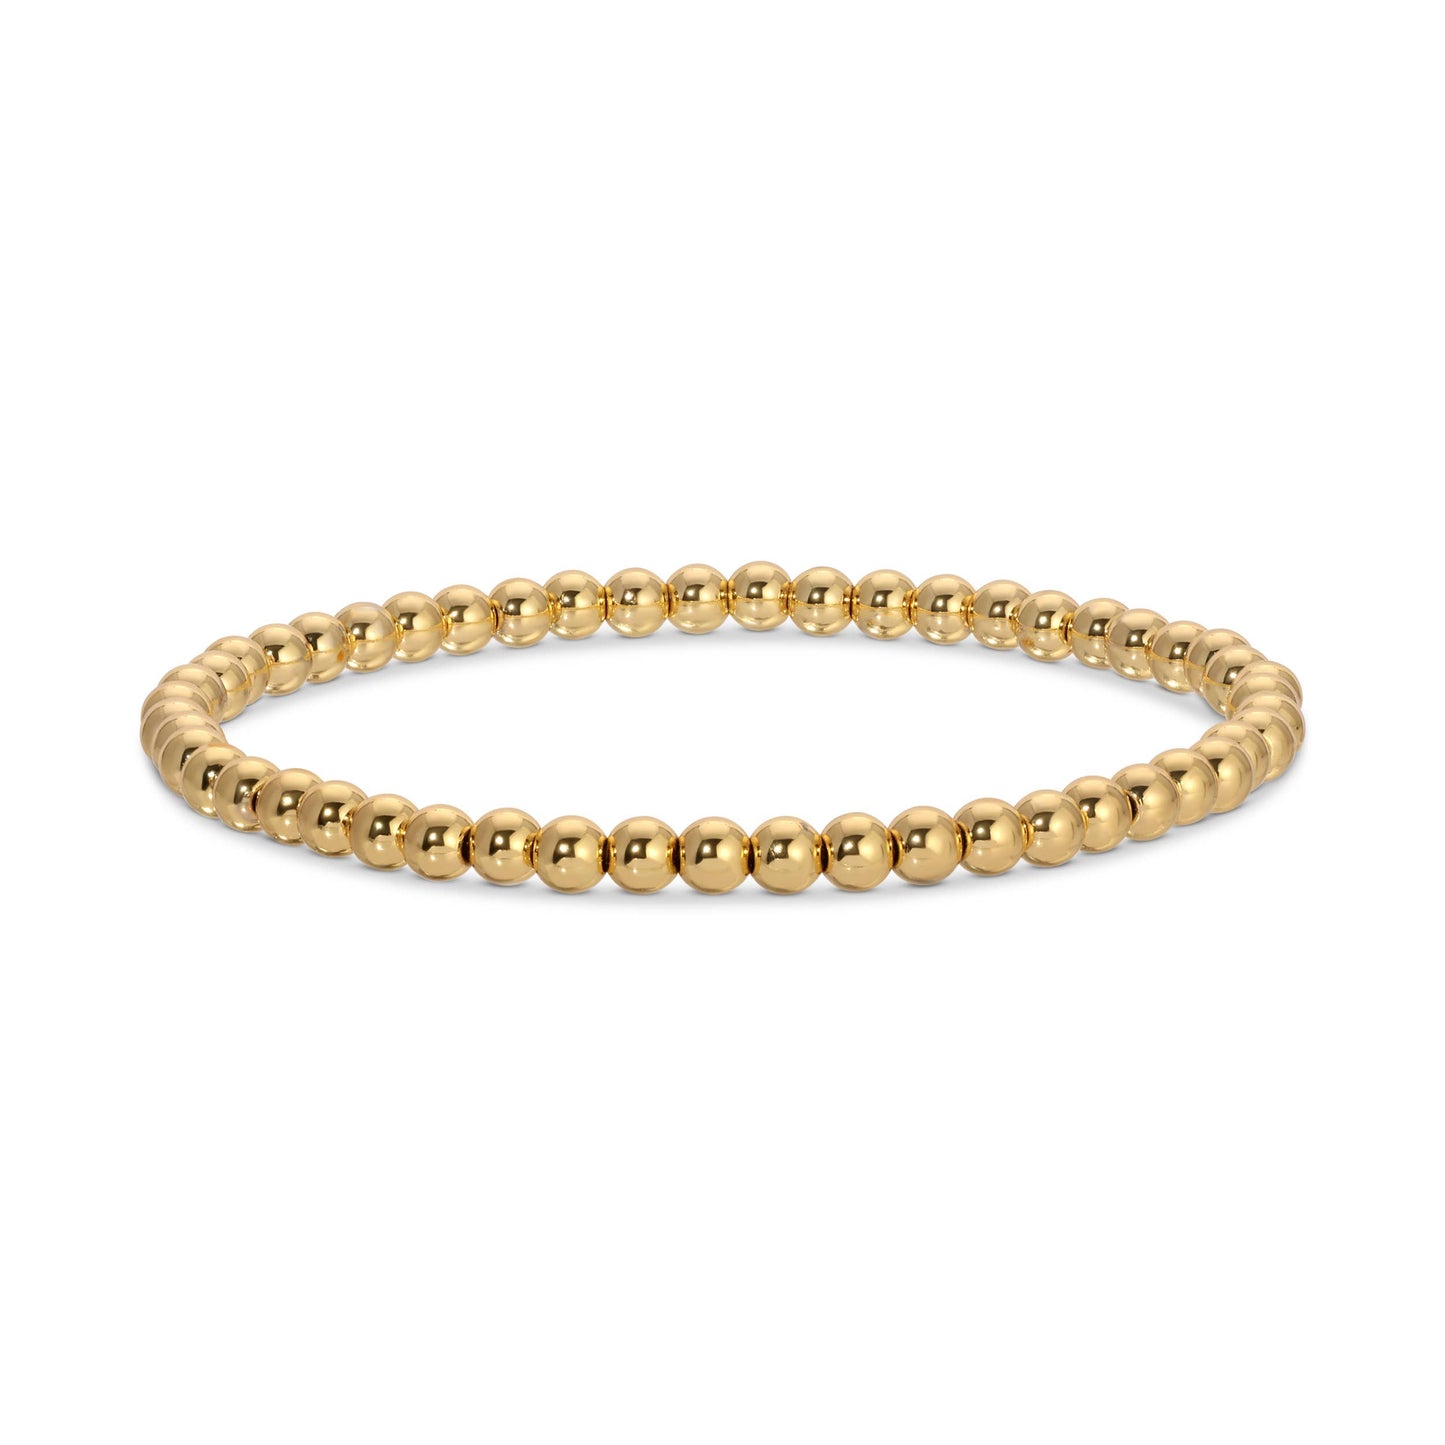 4mm Bead Stretch Bracelet: Gold